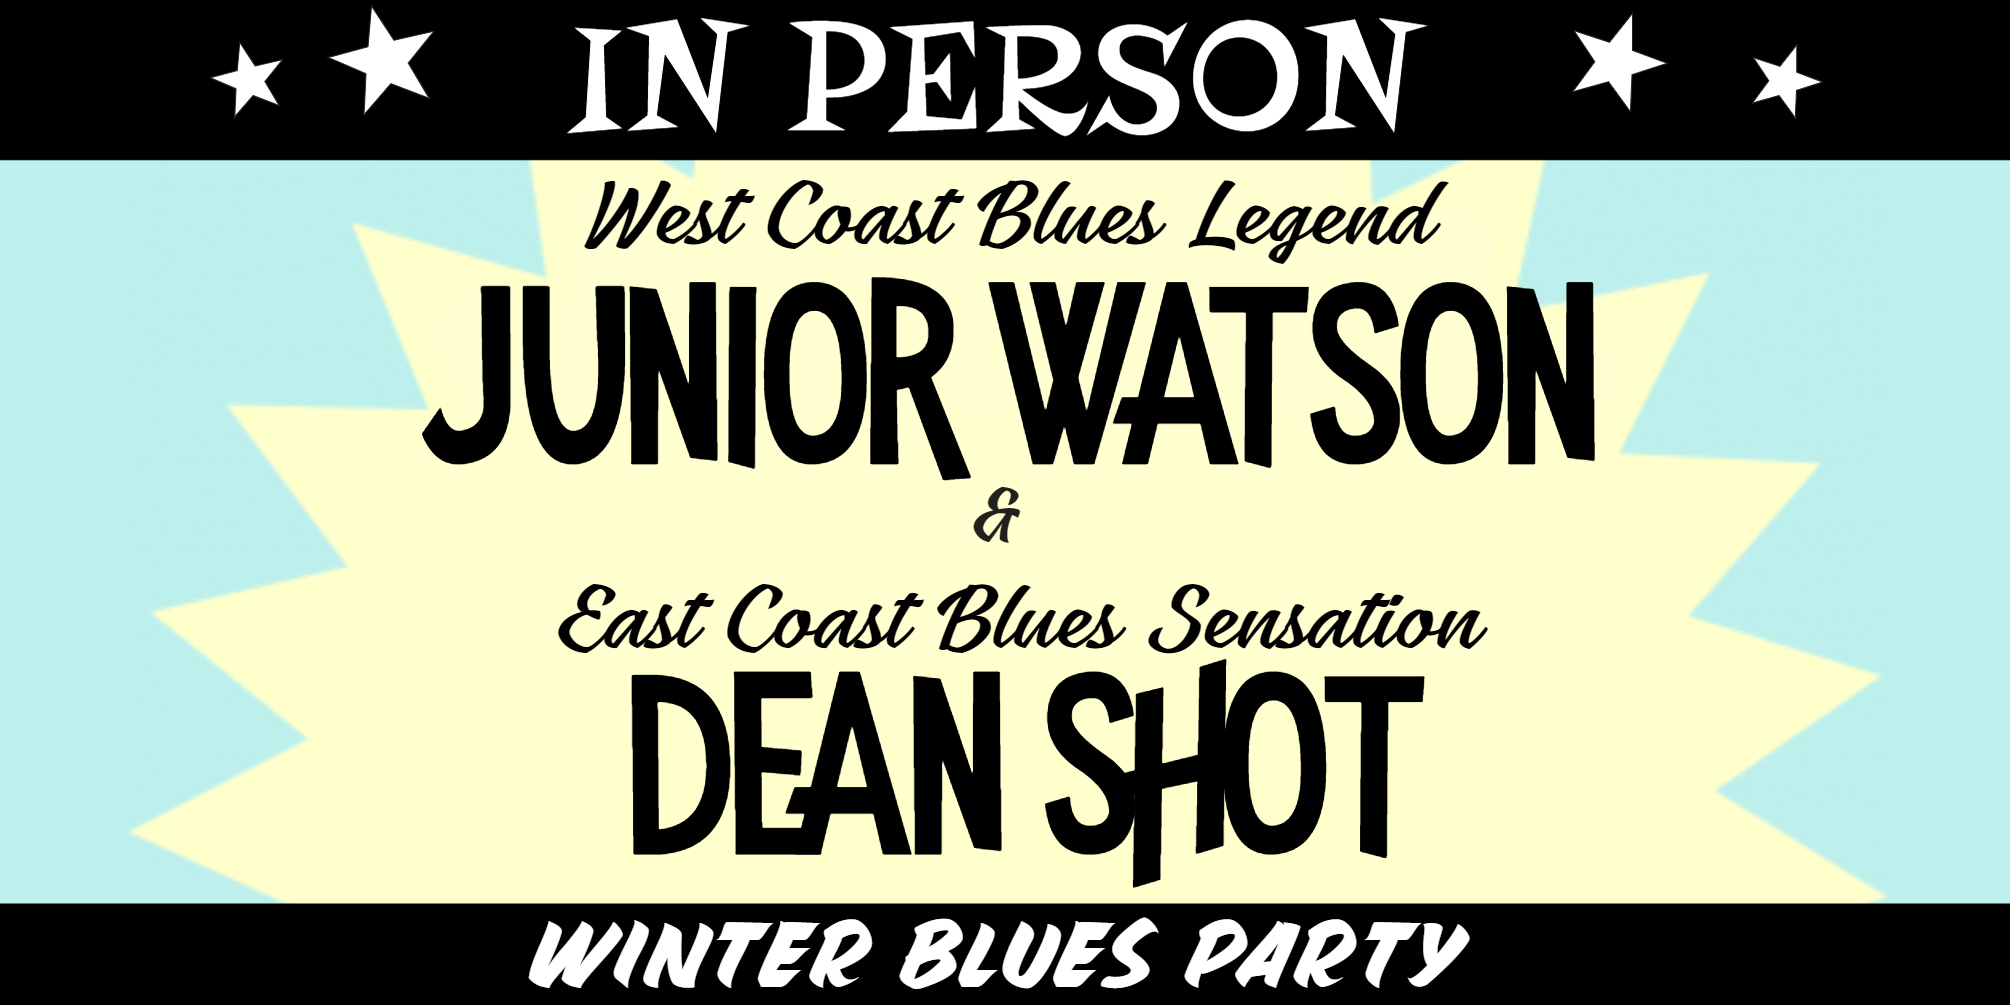 Junior Watson and Dean Shot